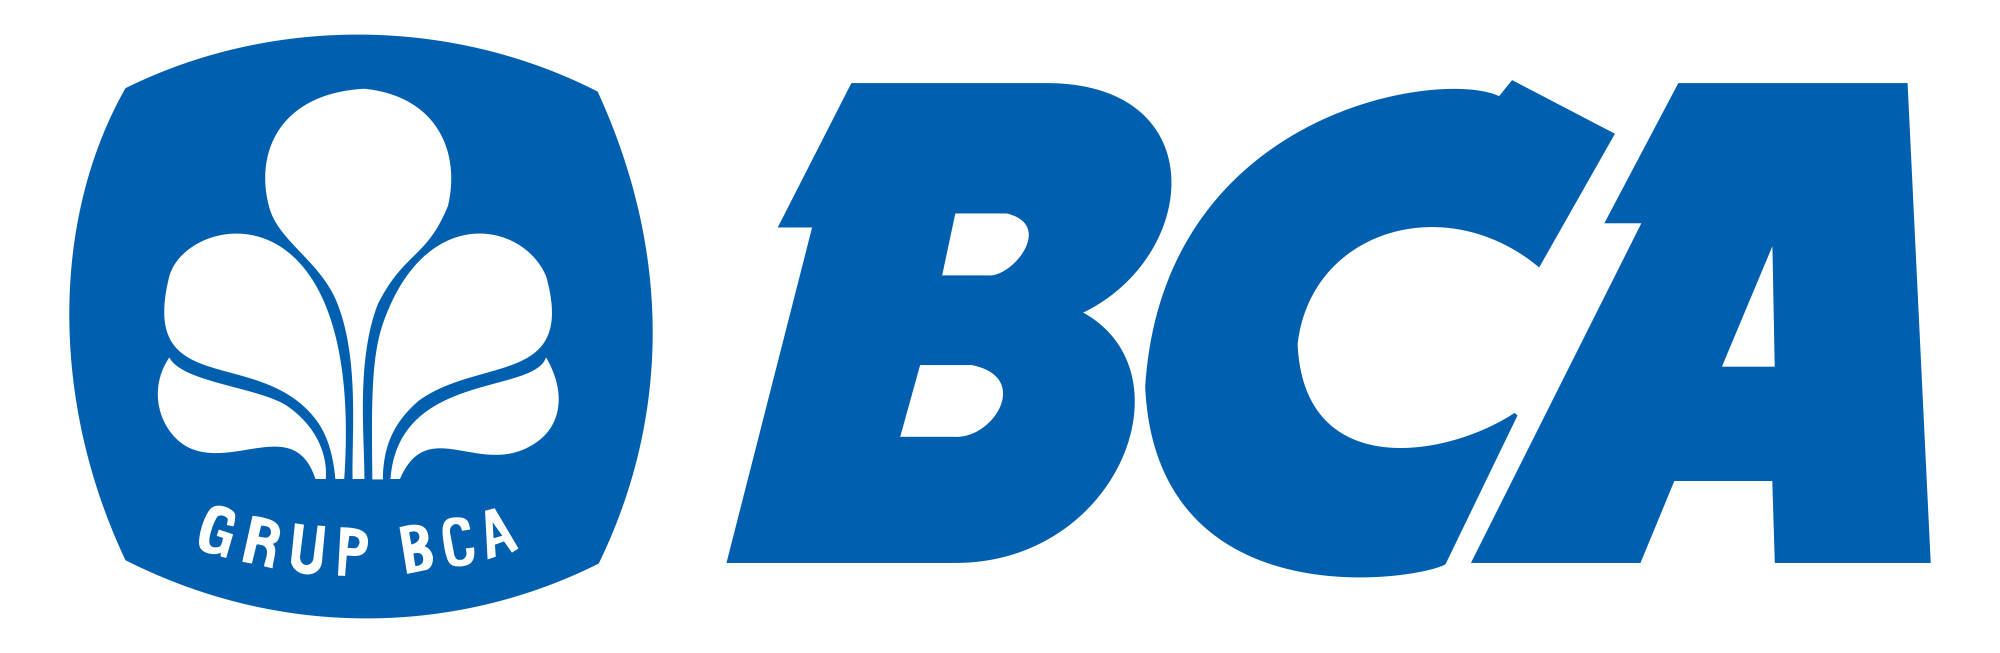 bank-bca-vector-logo.png